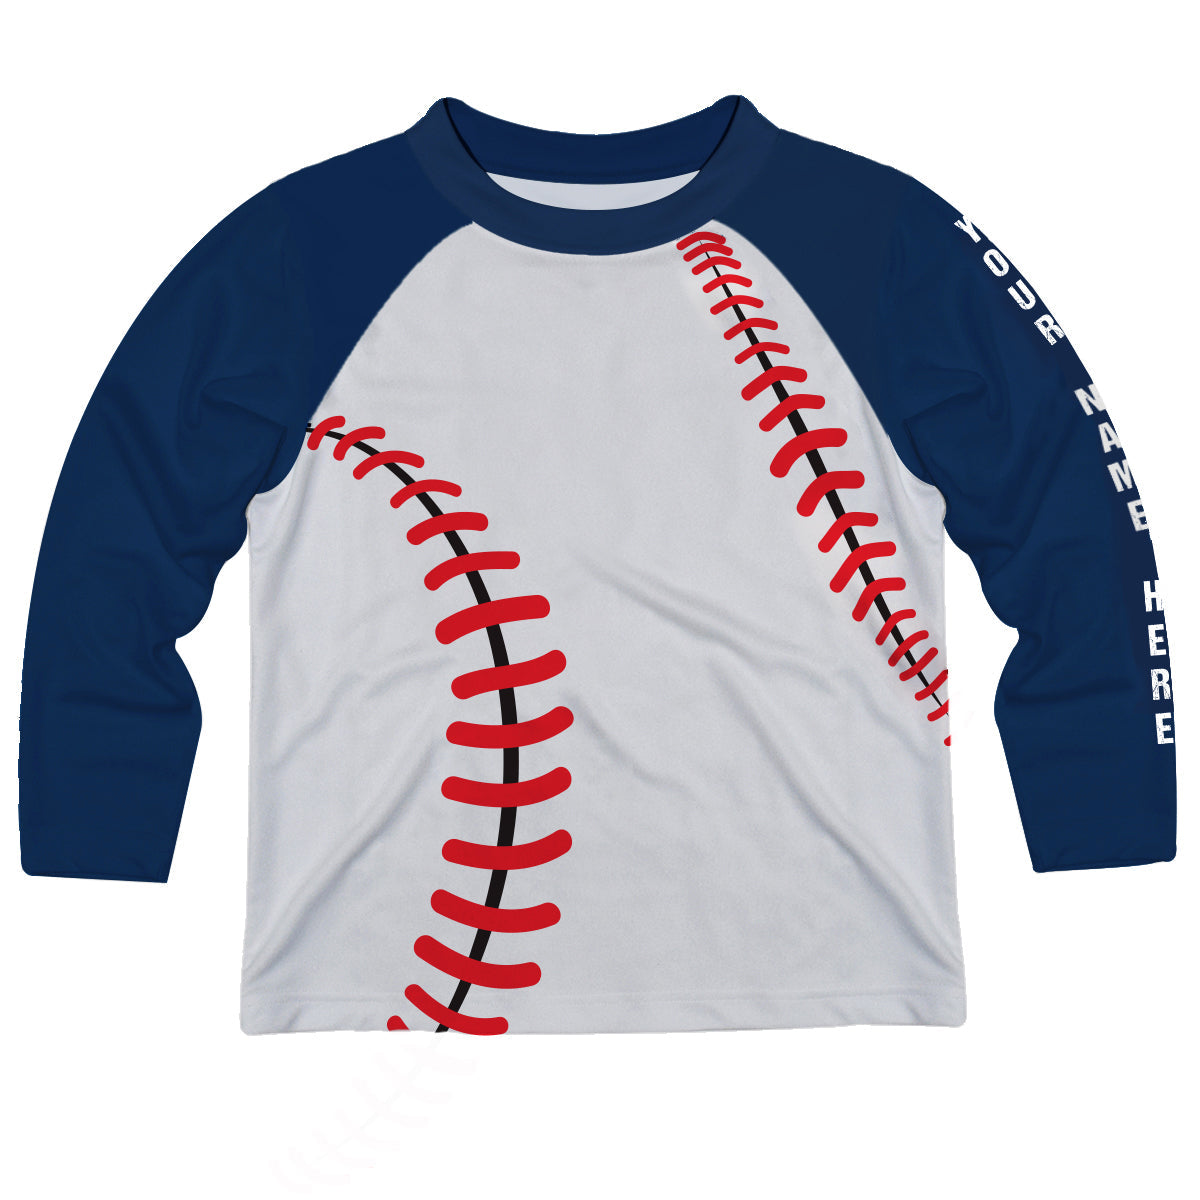 Baseball Name White and Navy Raglan Long Sleeve Tee Shirt - Wimziy&Co.